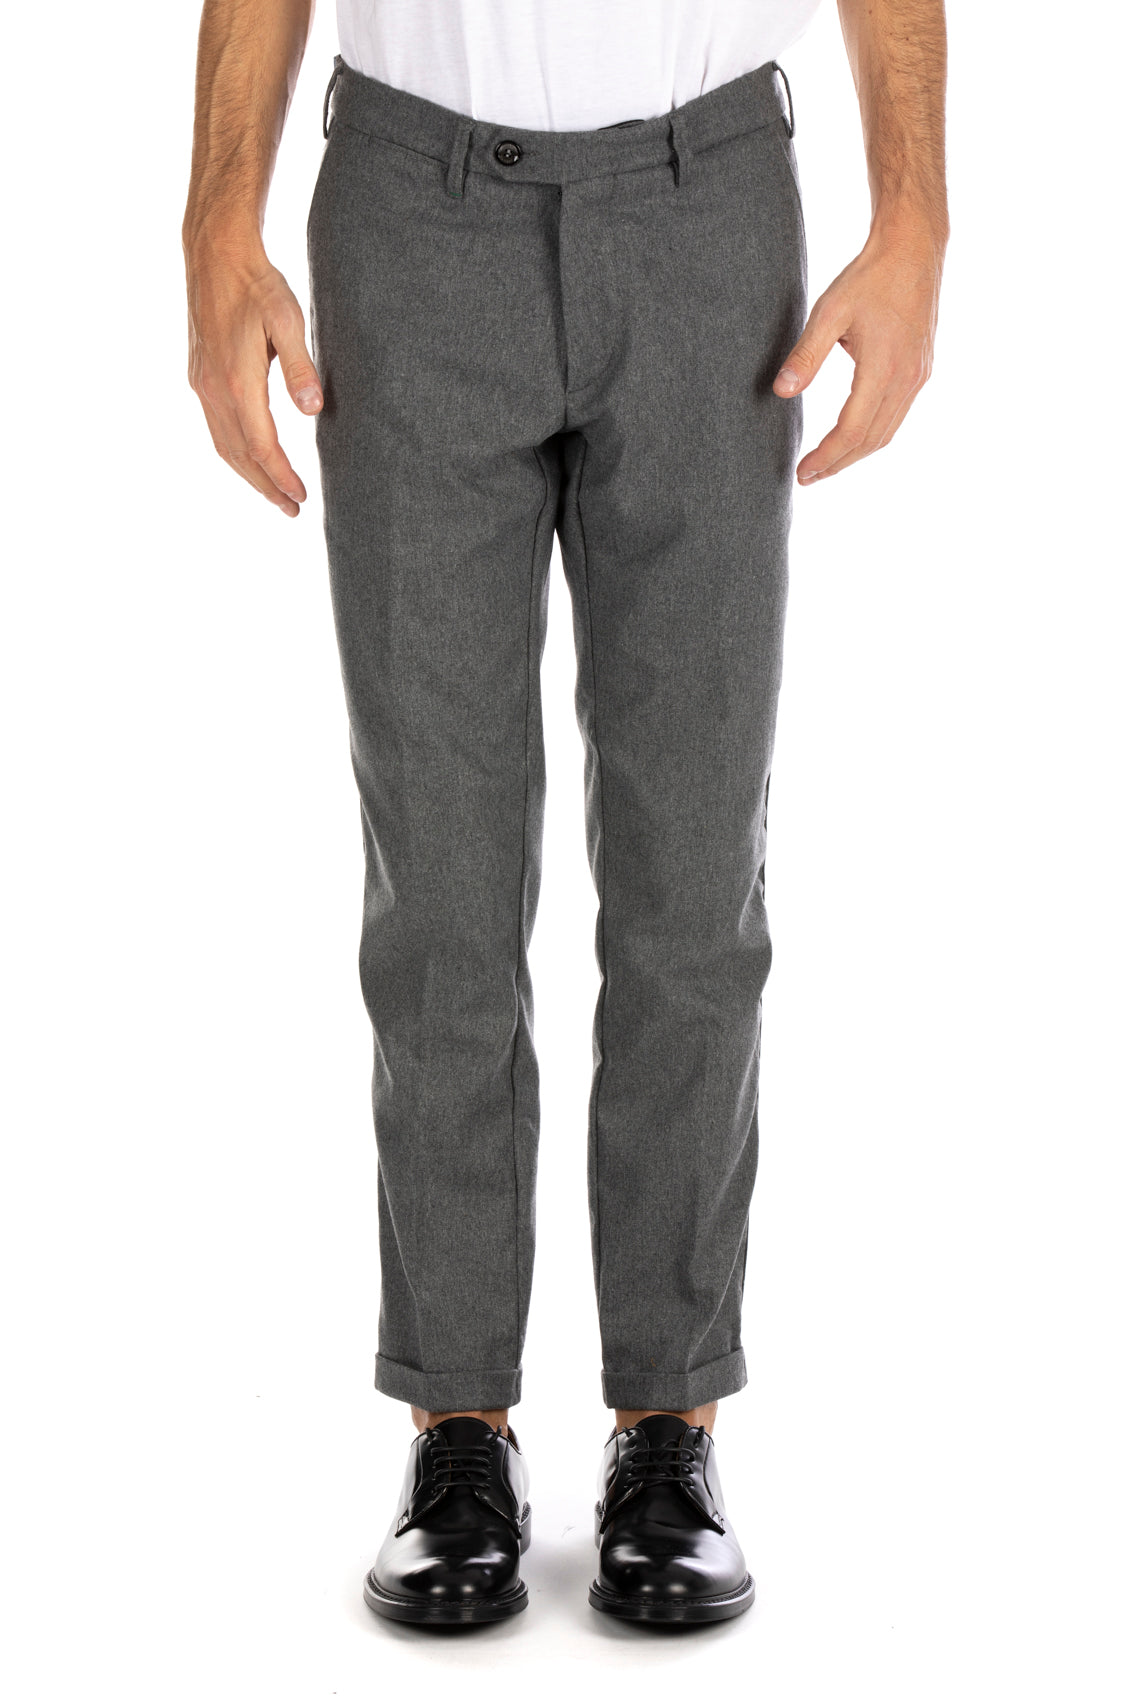 Re-Hash P249CG-3302 Pantalone Slim Tasca America Effetto Wool MELANGE GREY (grigio)